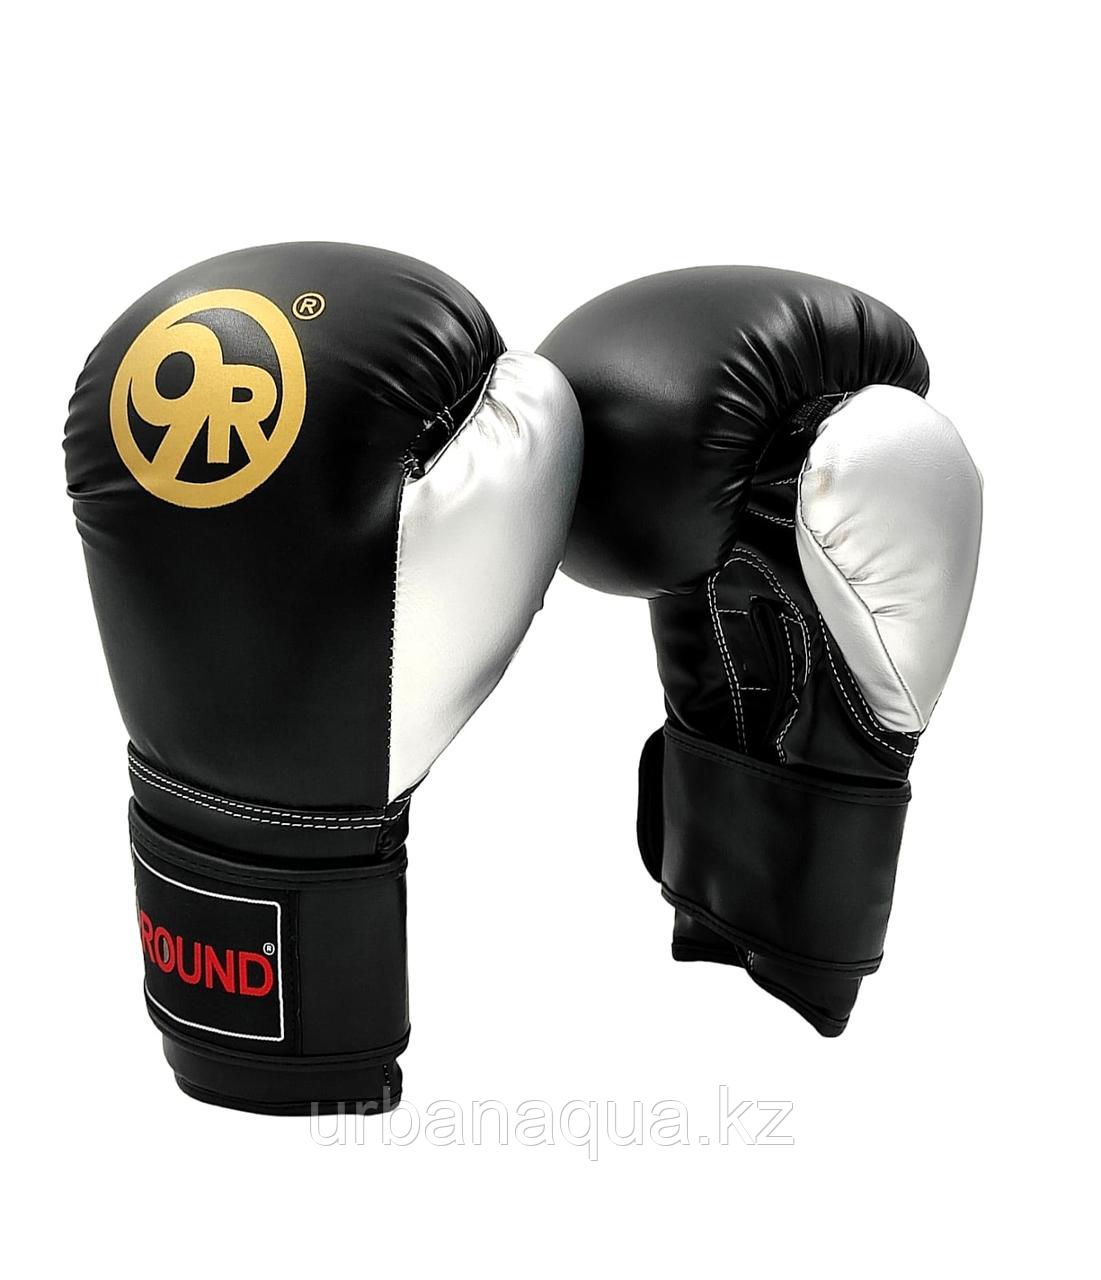 Перчатки боксерские 9R, фото 1